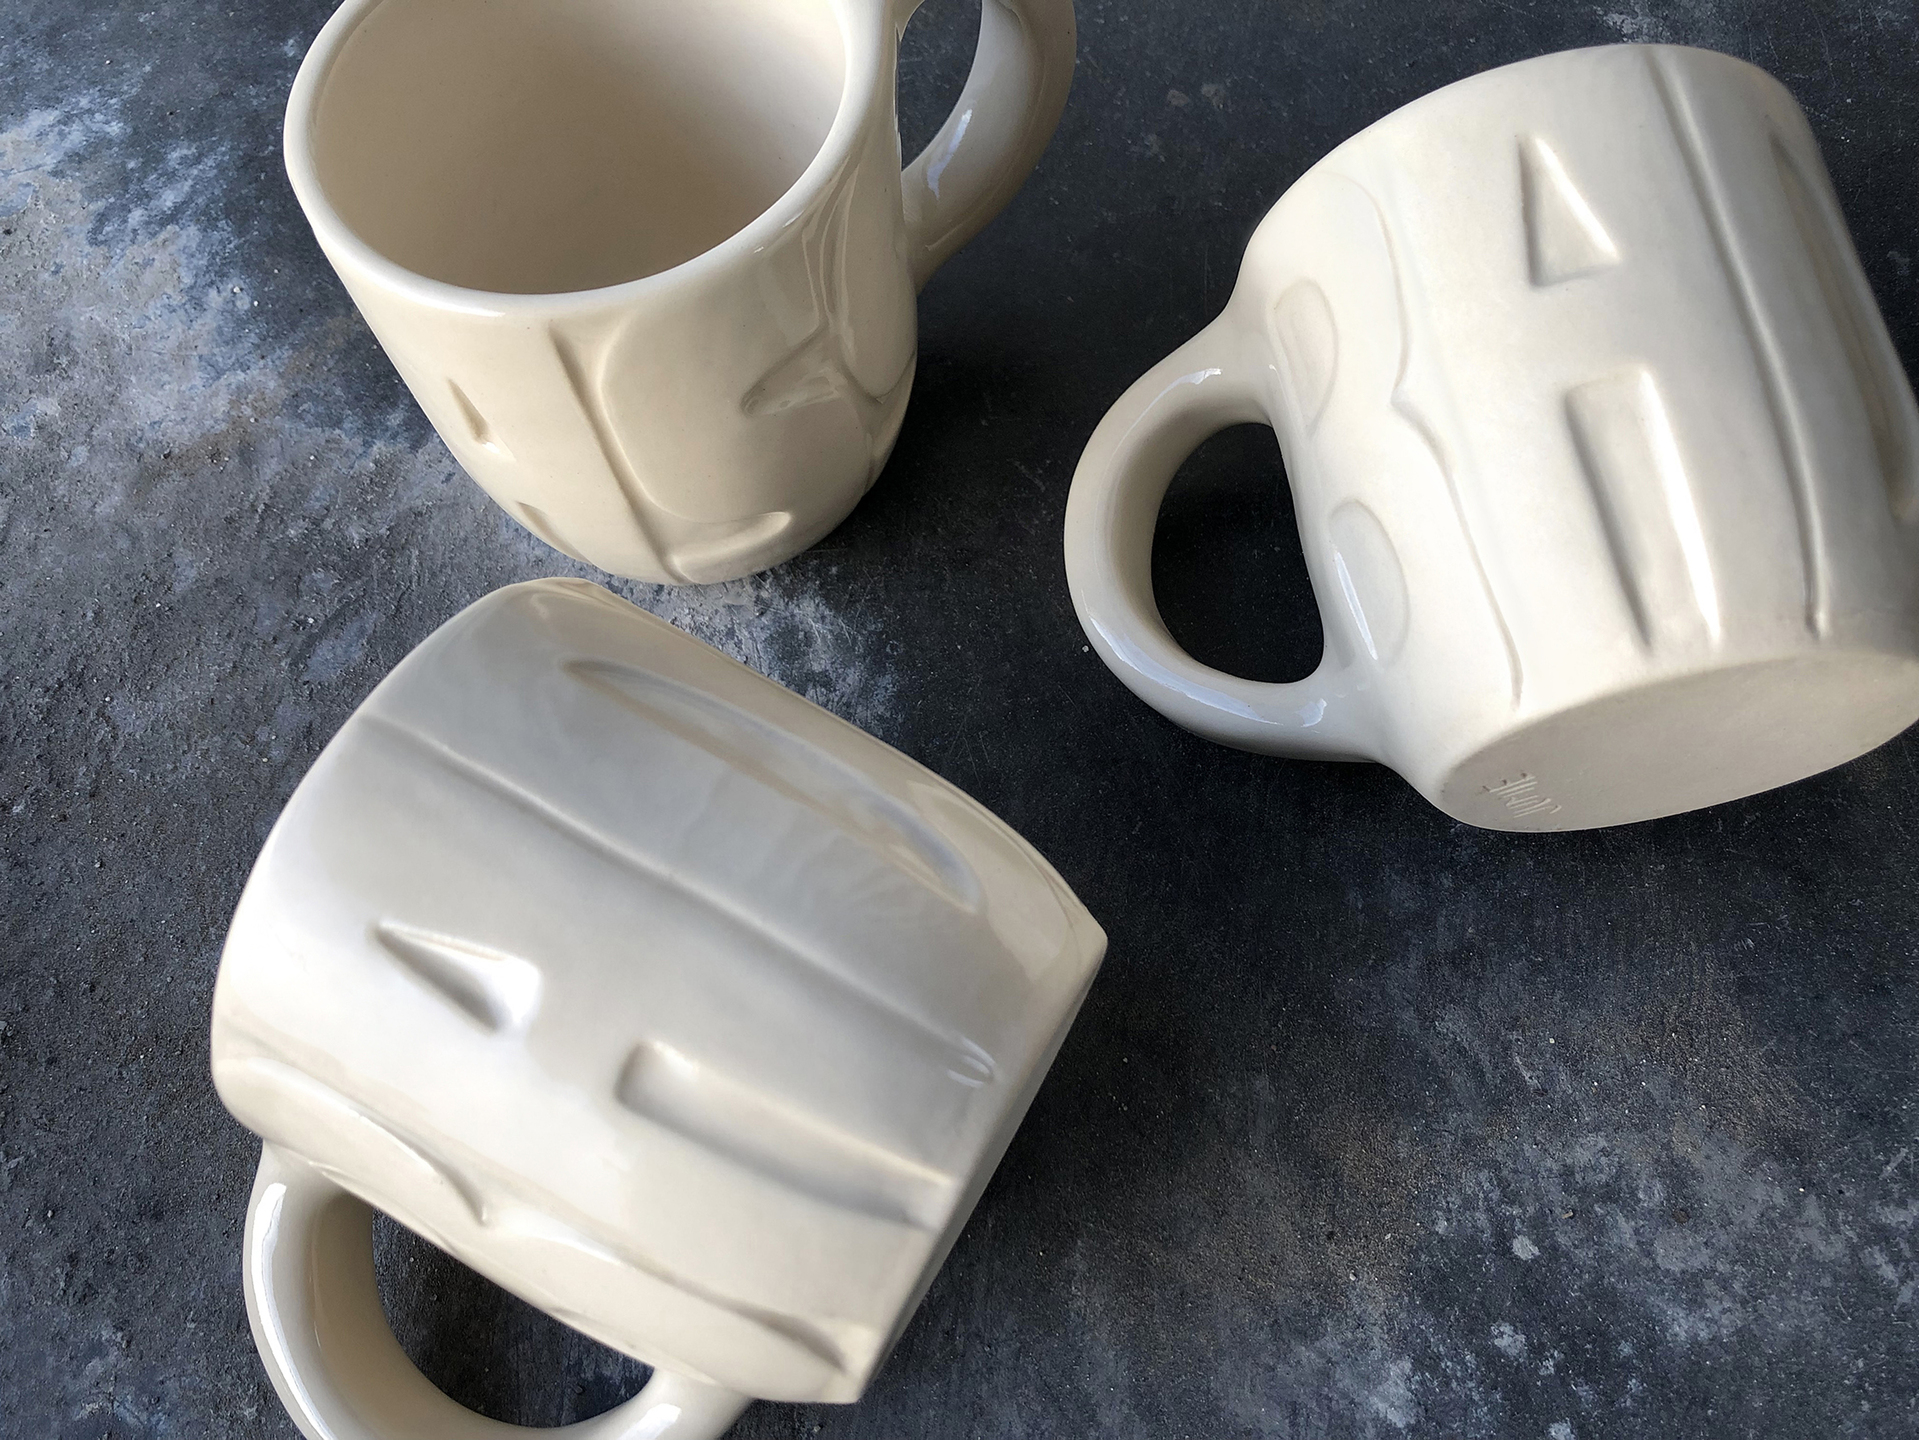 Linda Ra work titled Badass Espresso Mug with bold raised letterfroms embossed on the mugs.